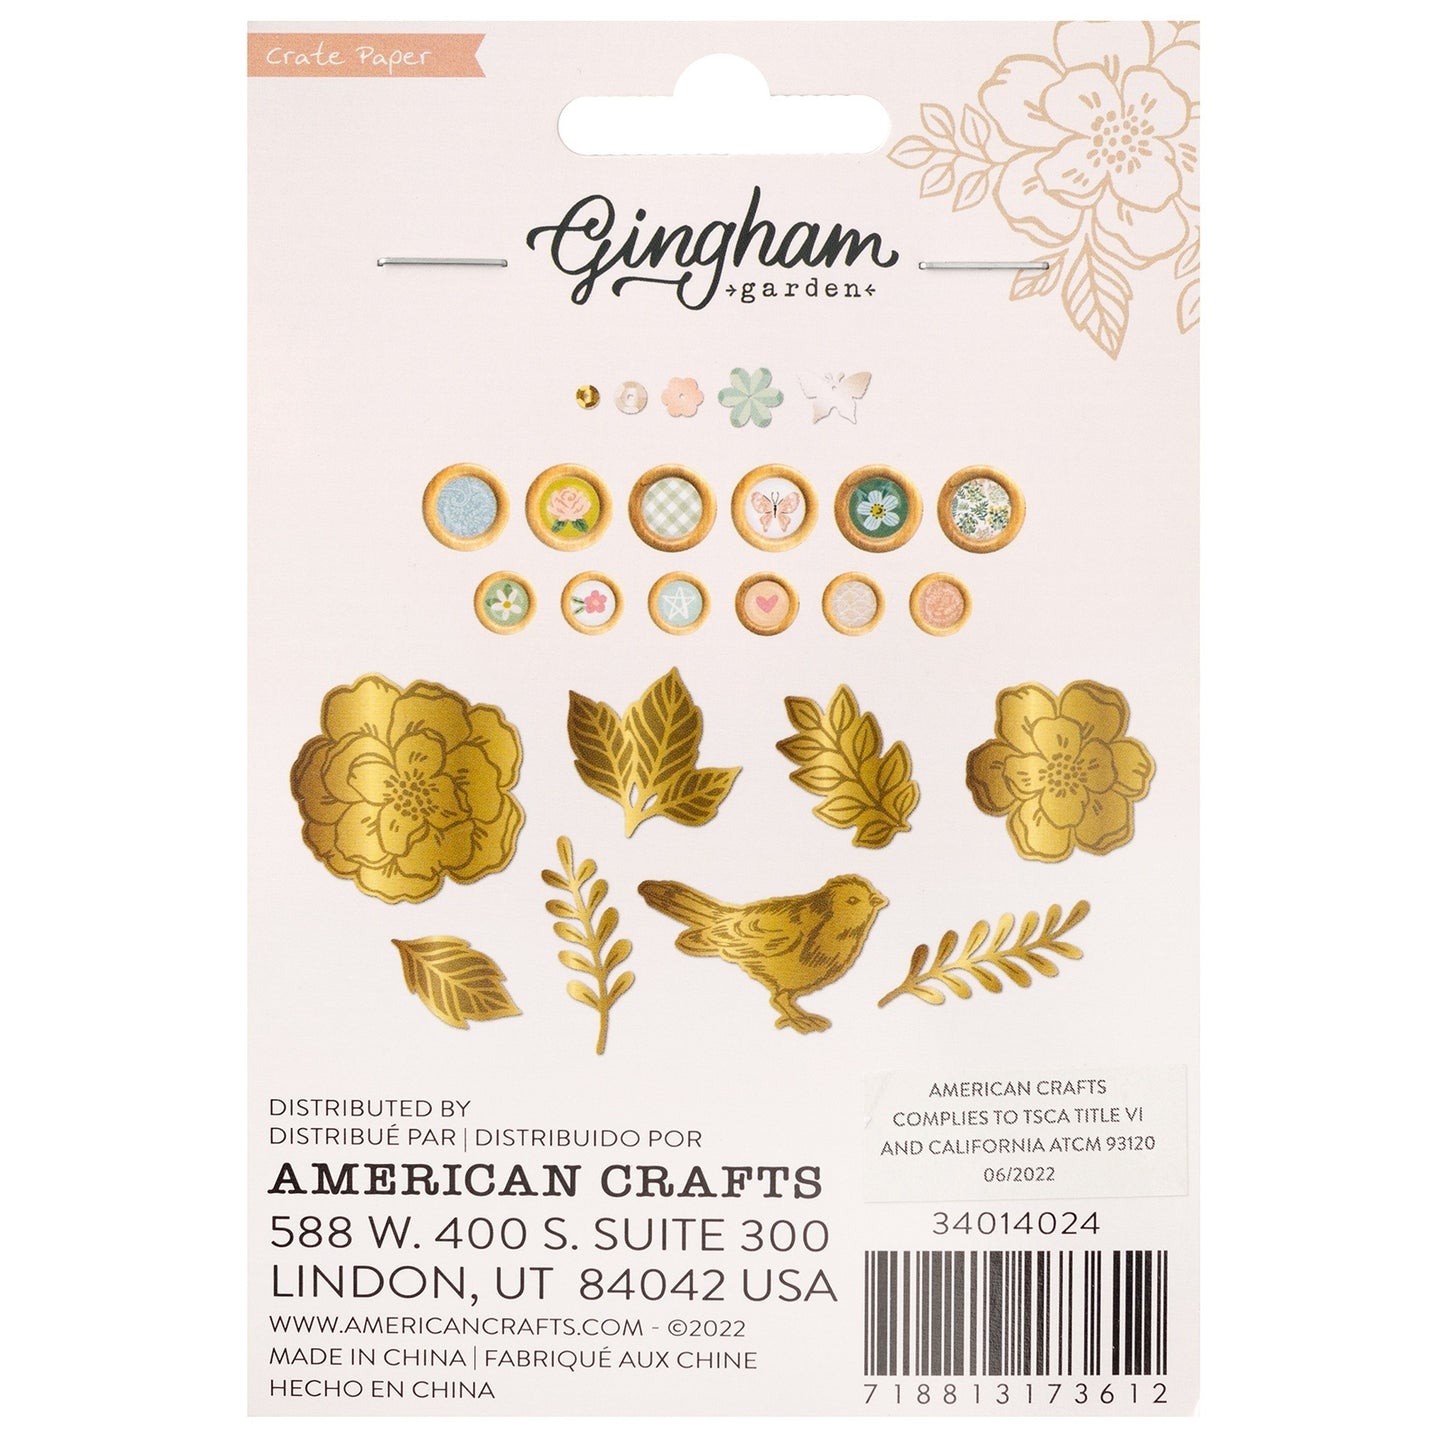 Gingham Garden Embellishment Buttons 20/Pkg-W/Gold Foil